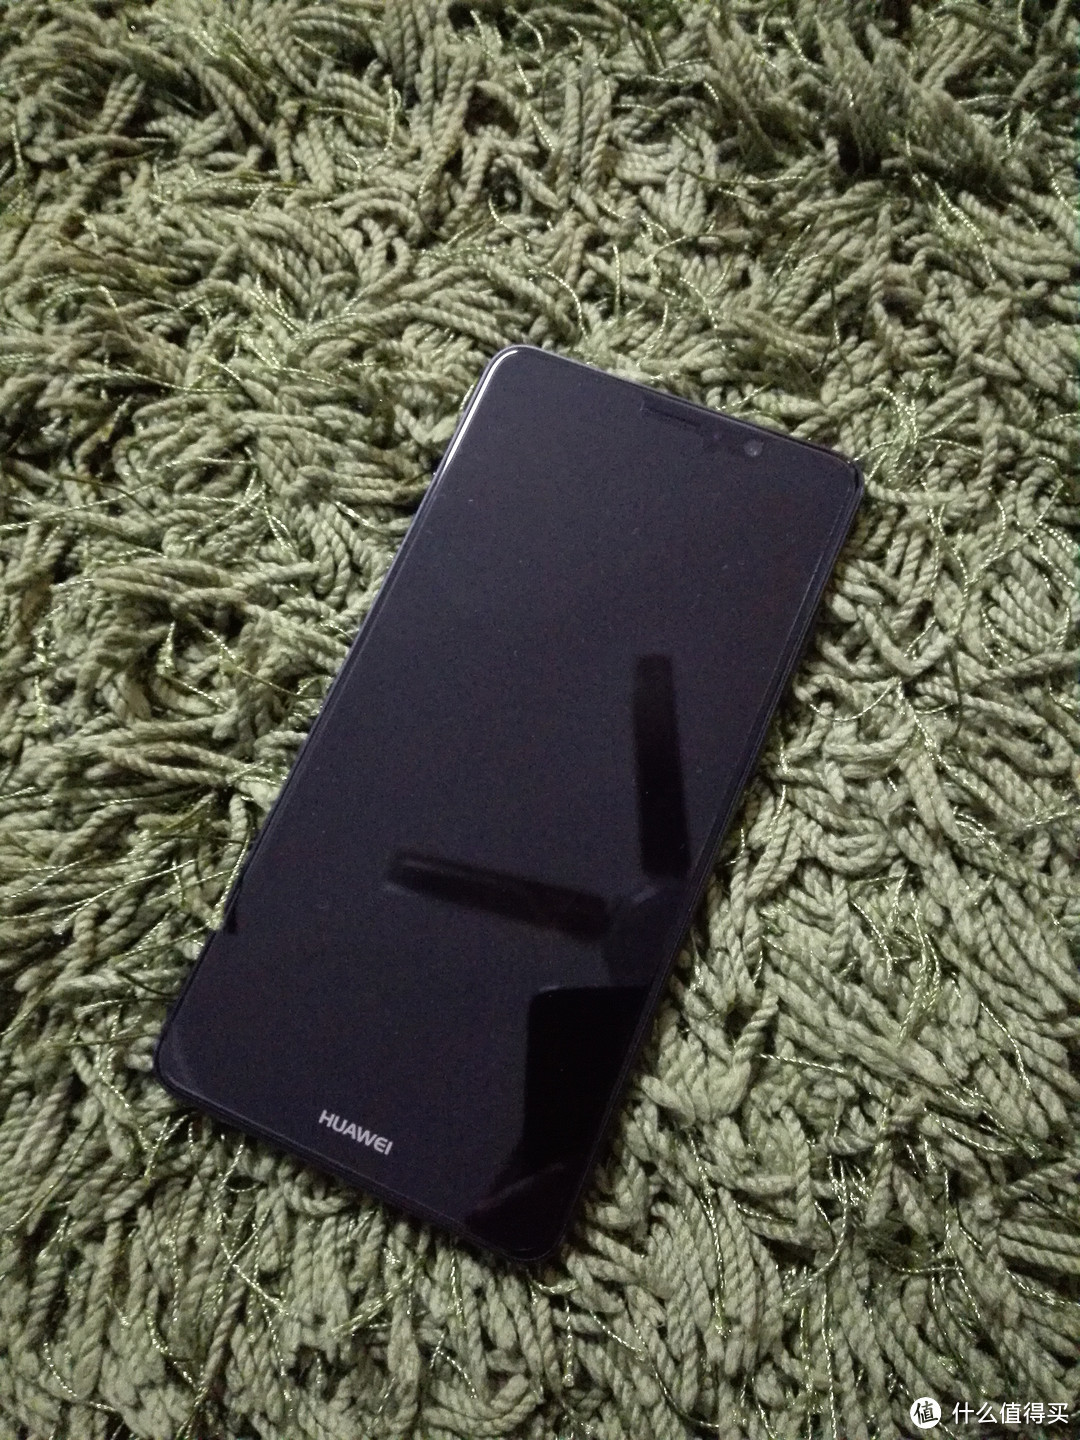 HUAWEI 华为 Mate 9 智能手机 黑色 开箱晒单